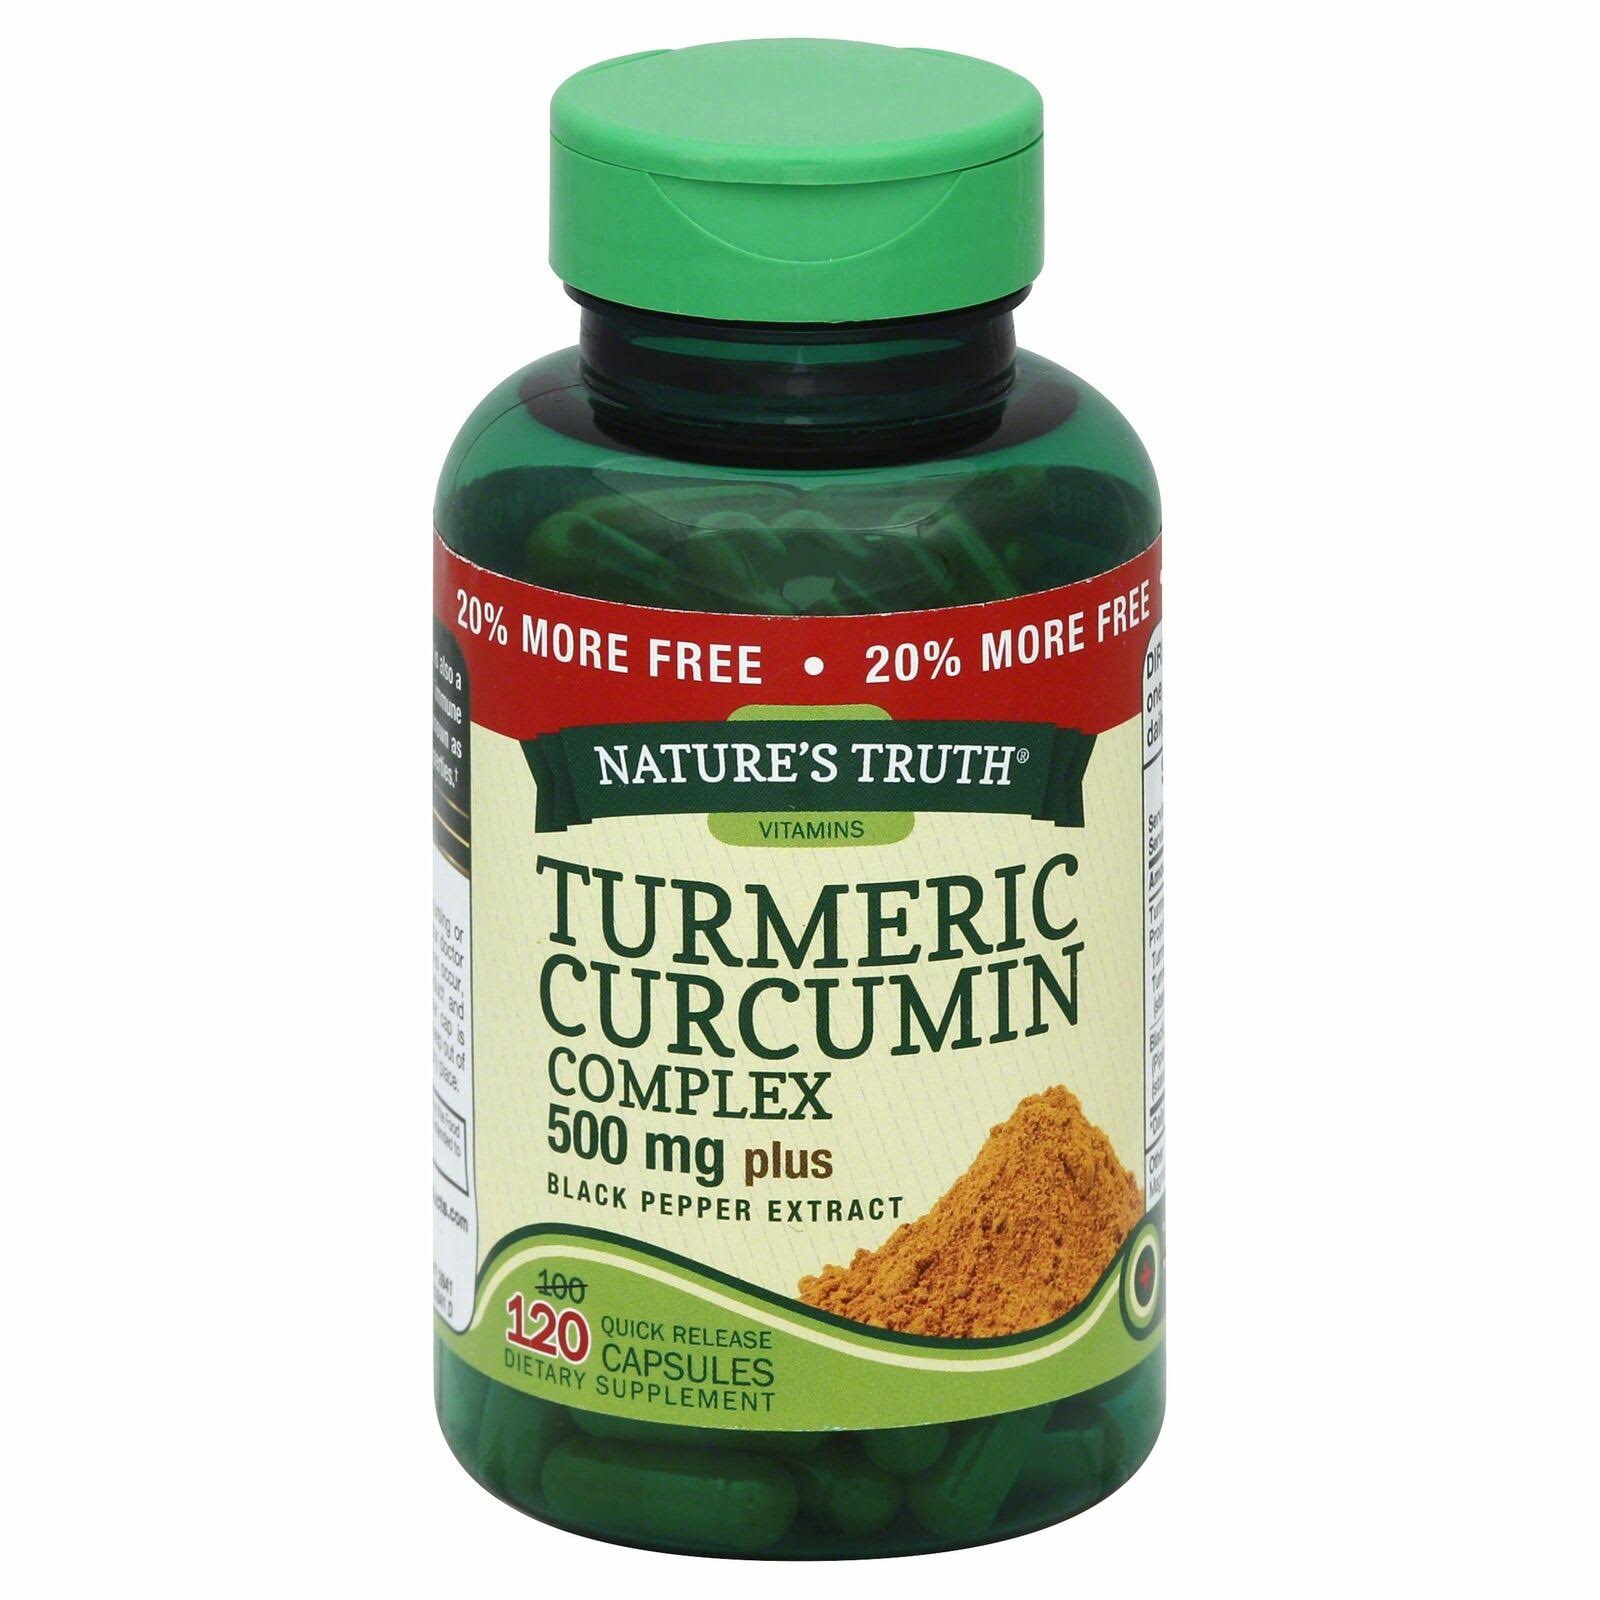 Nature's Truth Turmeric Curcumin Complex 500 mg Plus - Black Pepper Extract, 120ct